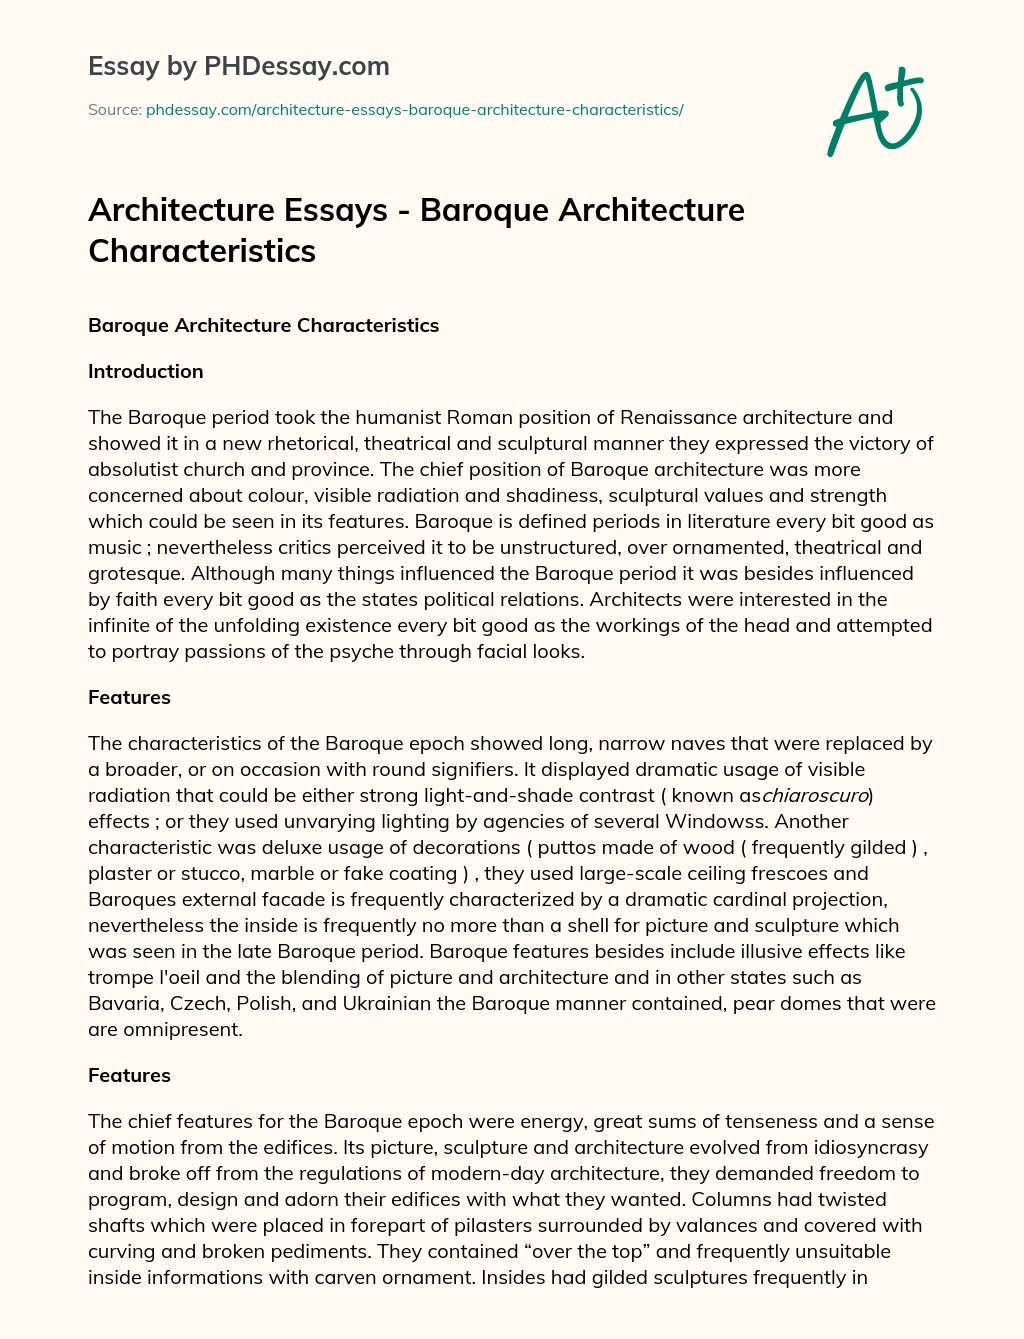 Architecture Essays – Baroque Architecture Characteristics essay